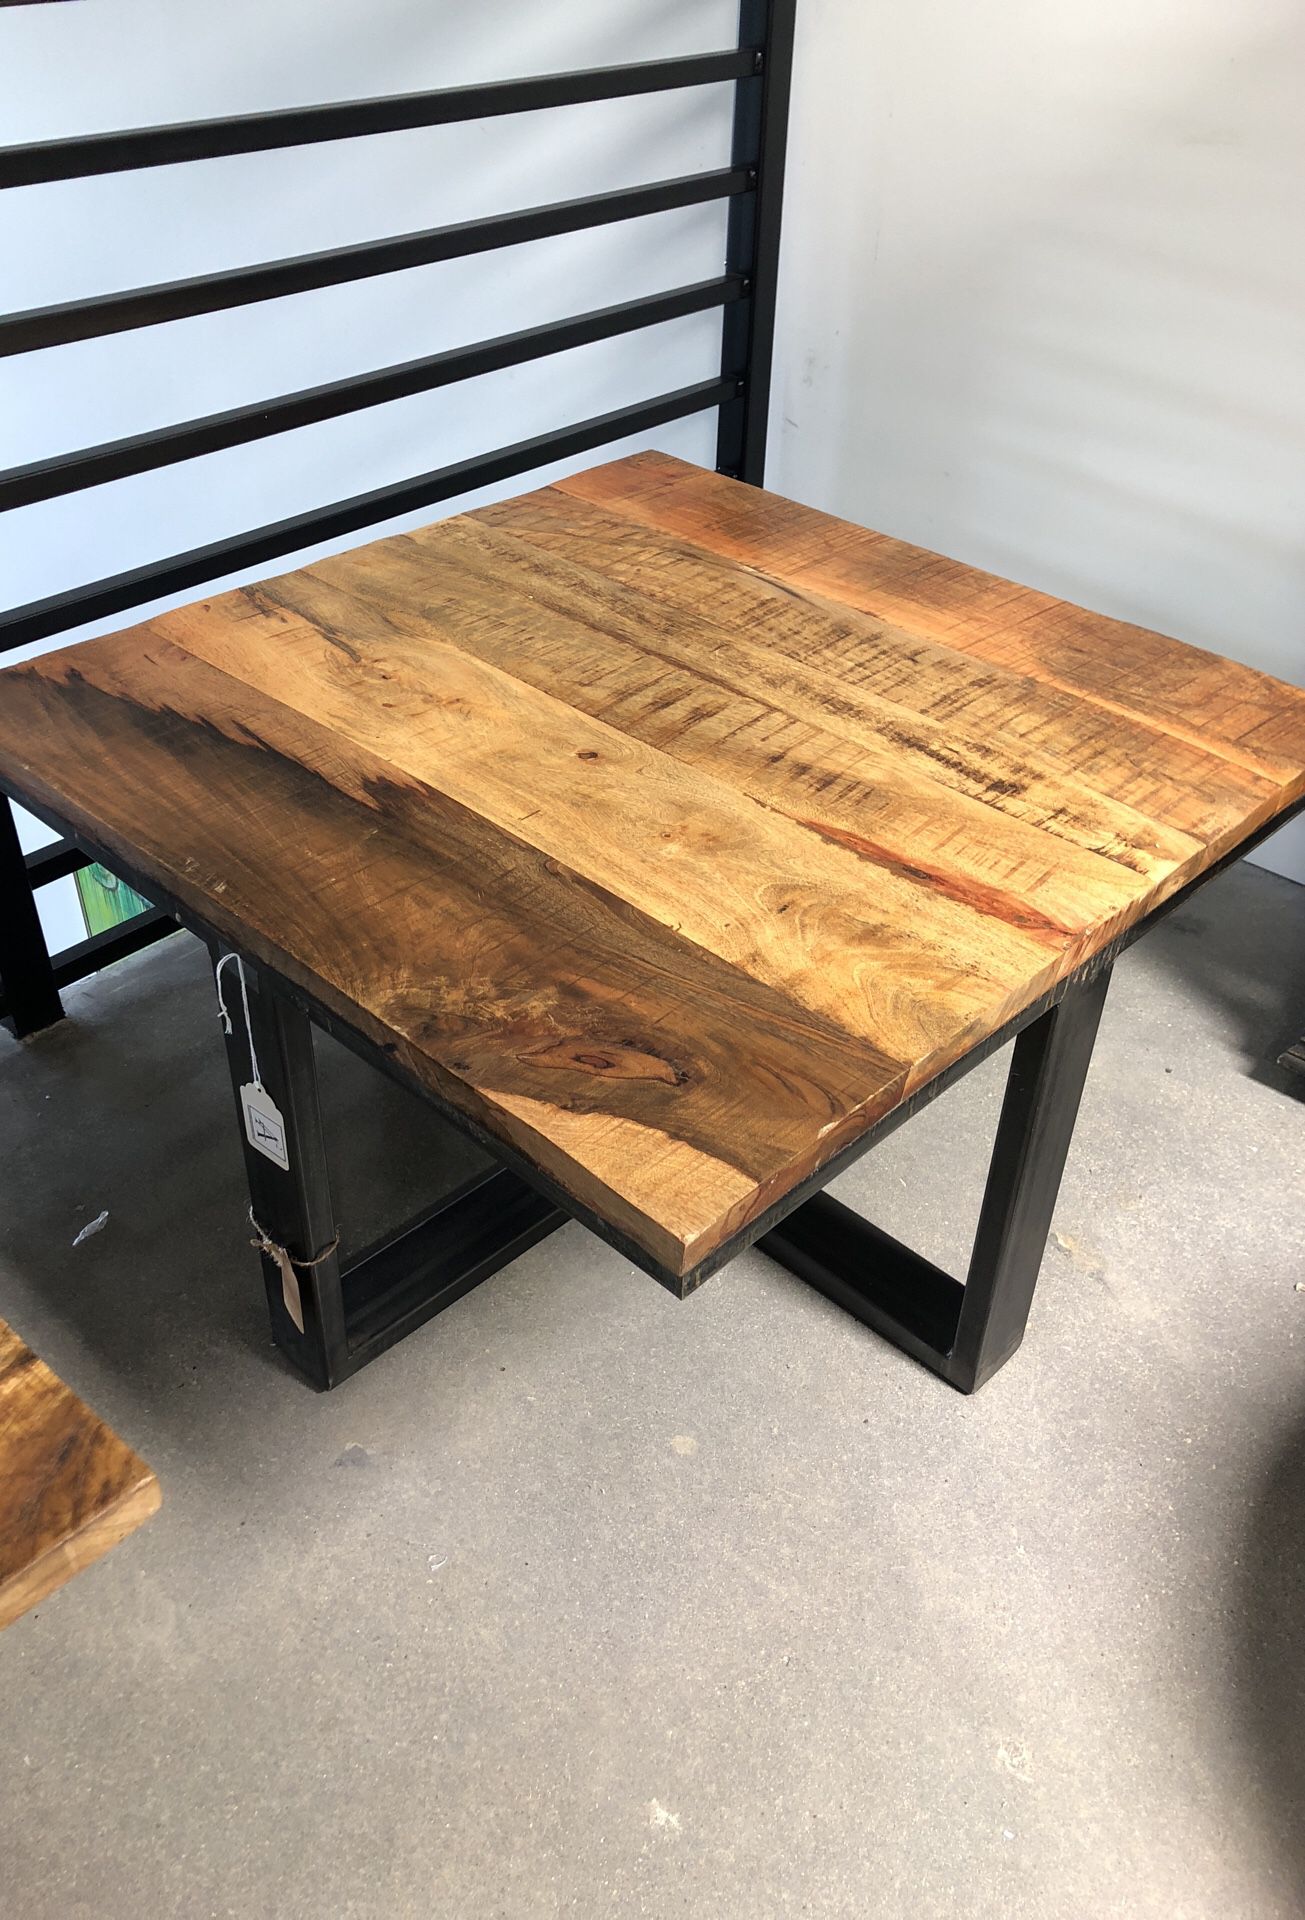 NEW bohemian rustic coffee table - 32” x 32” x 18”a